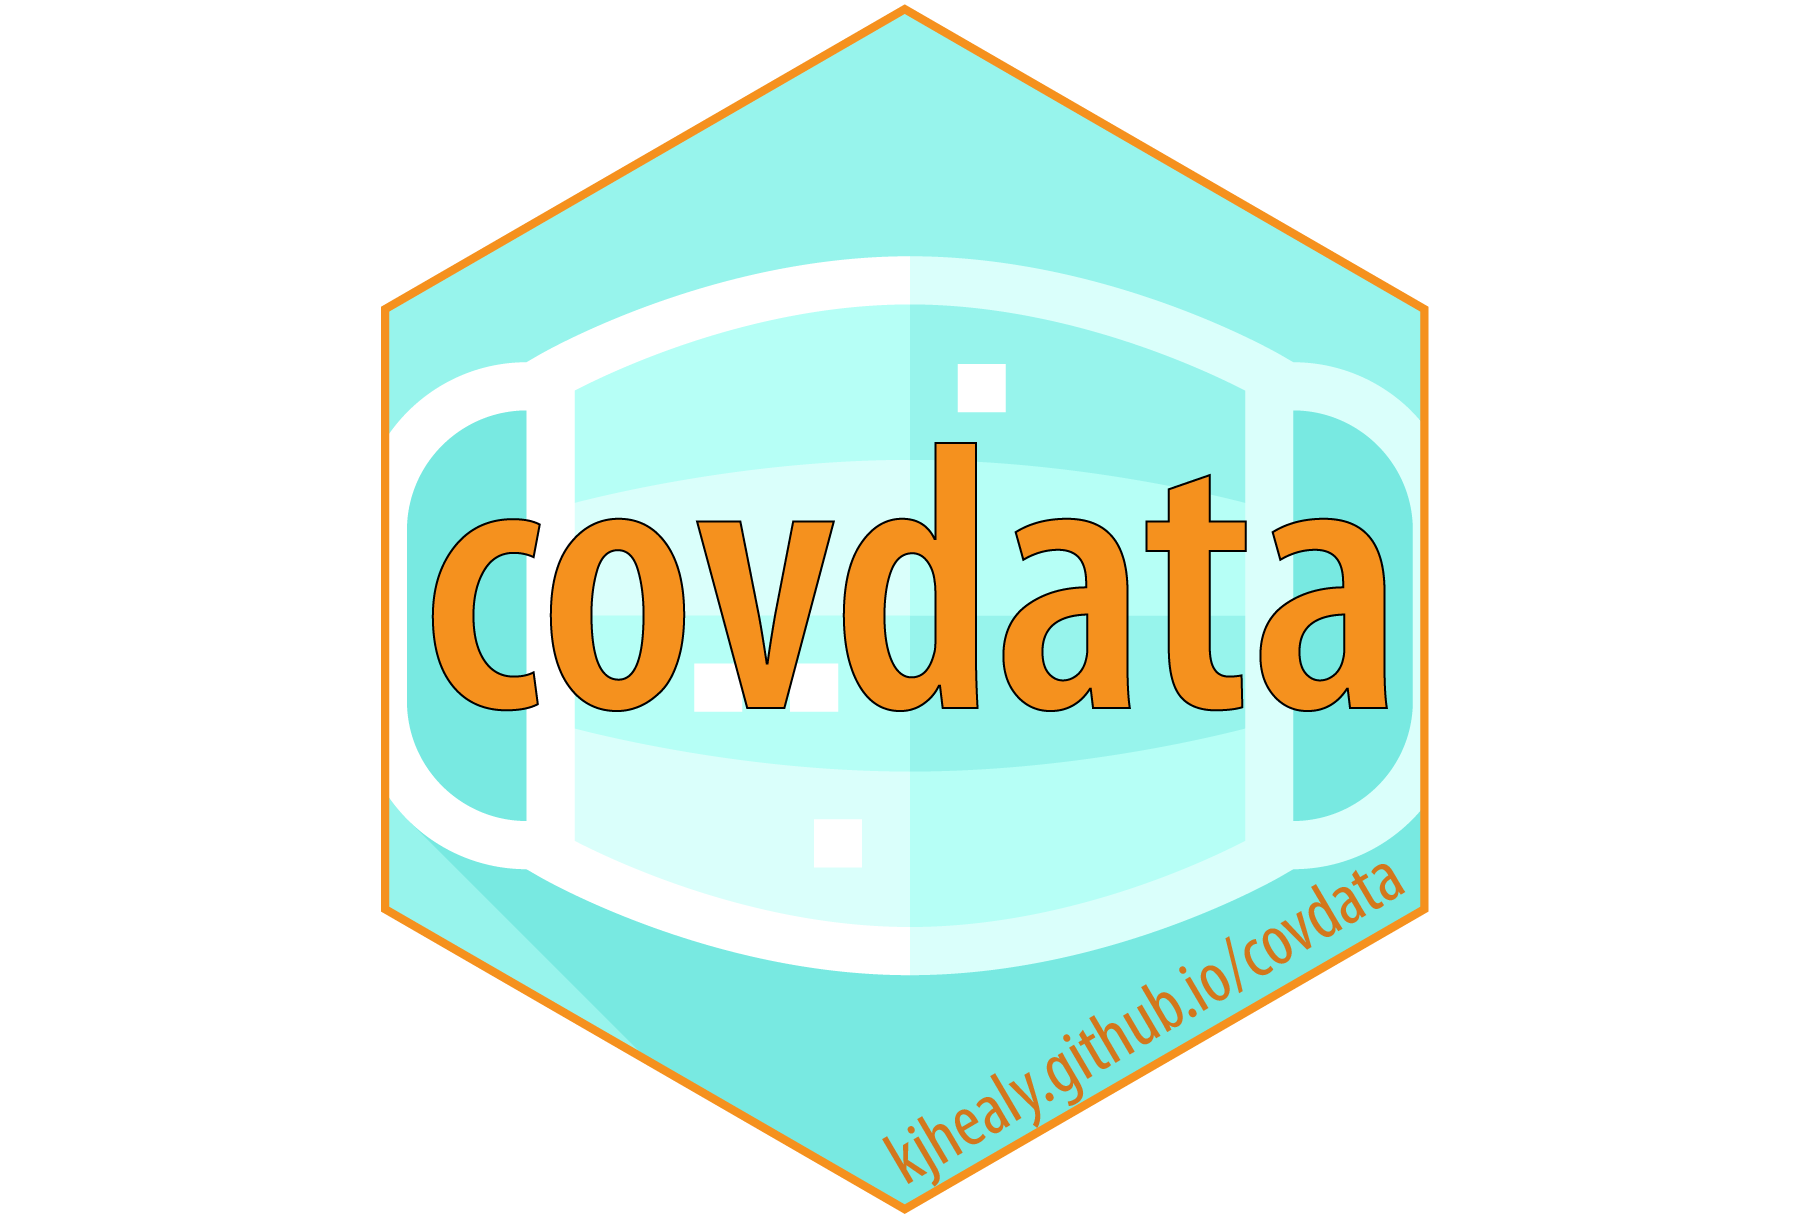 The covdata logo